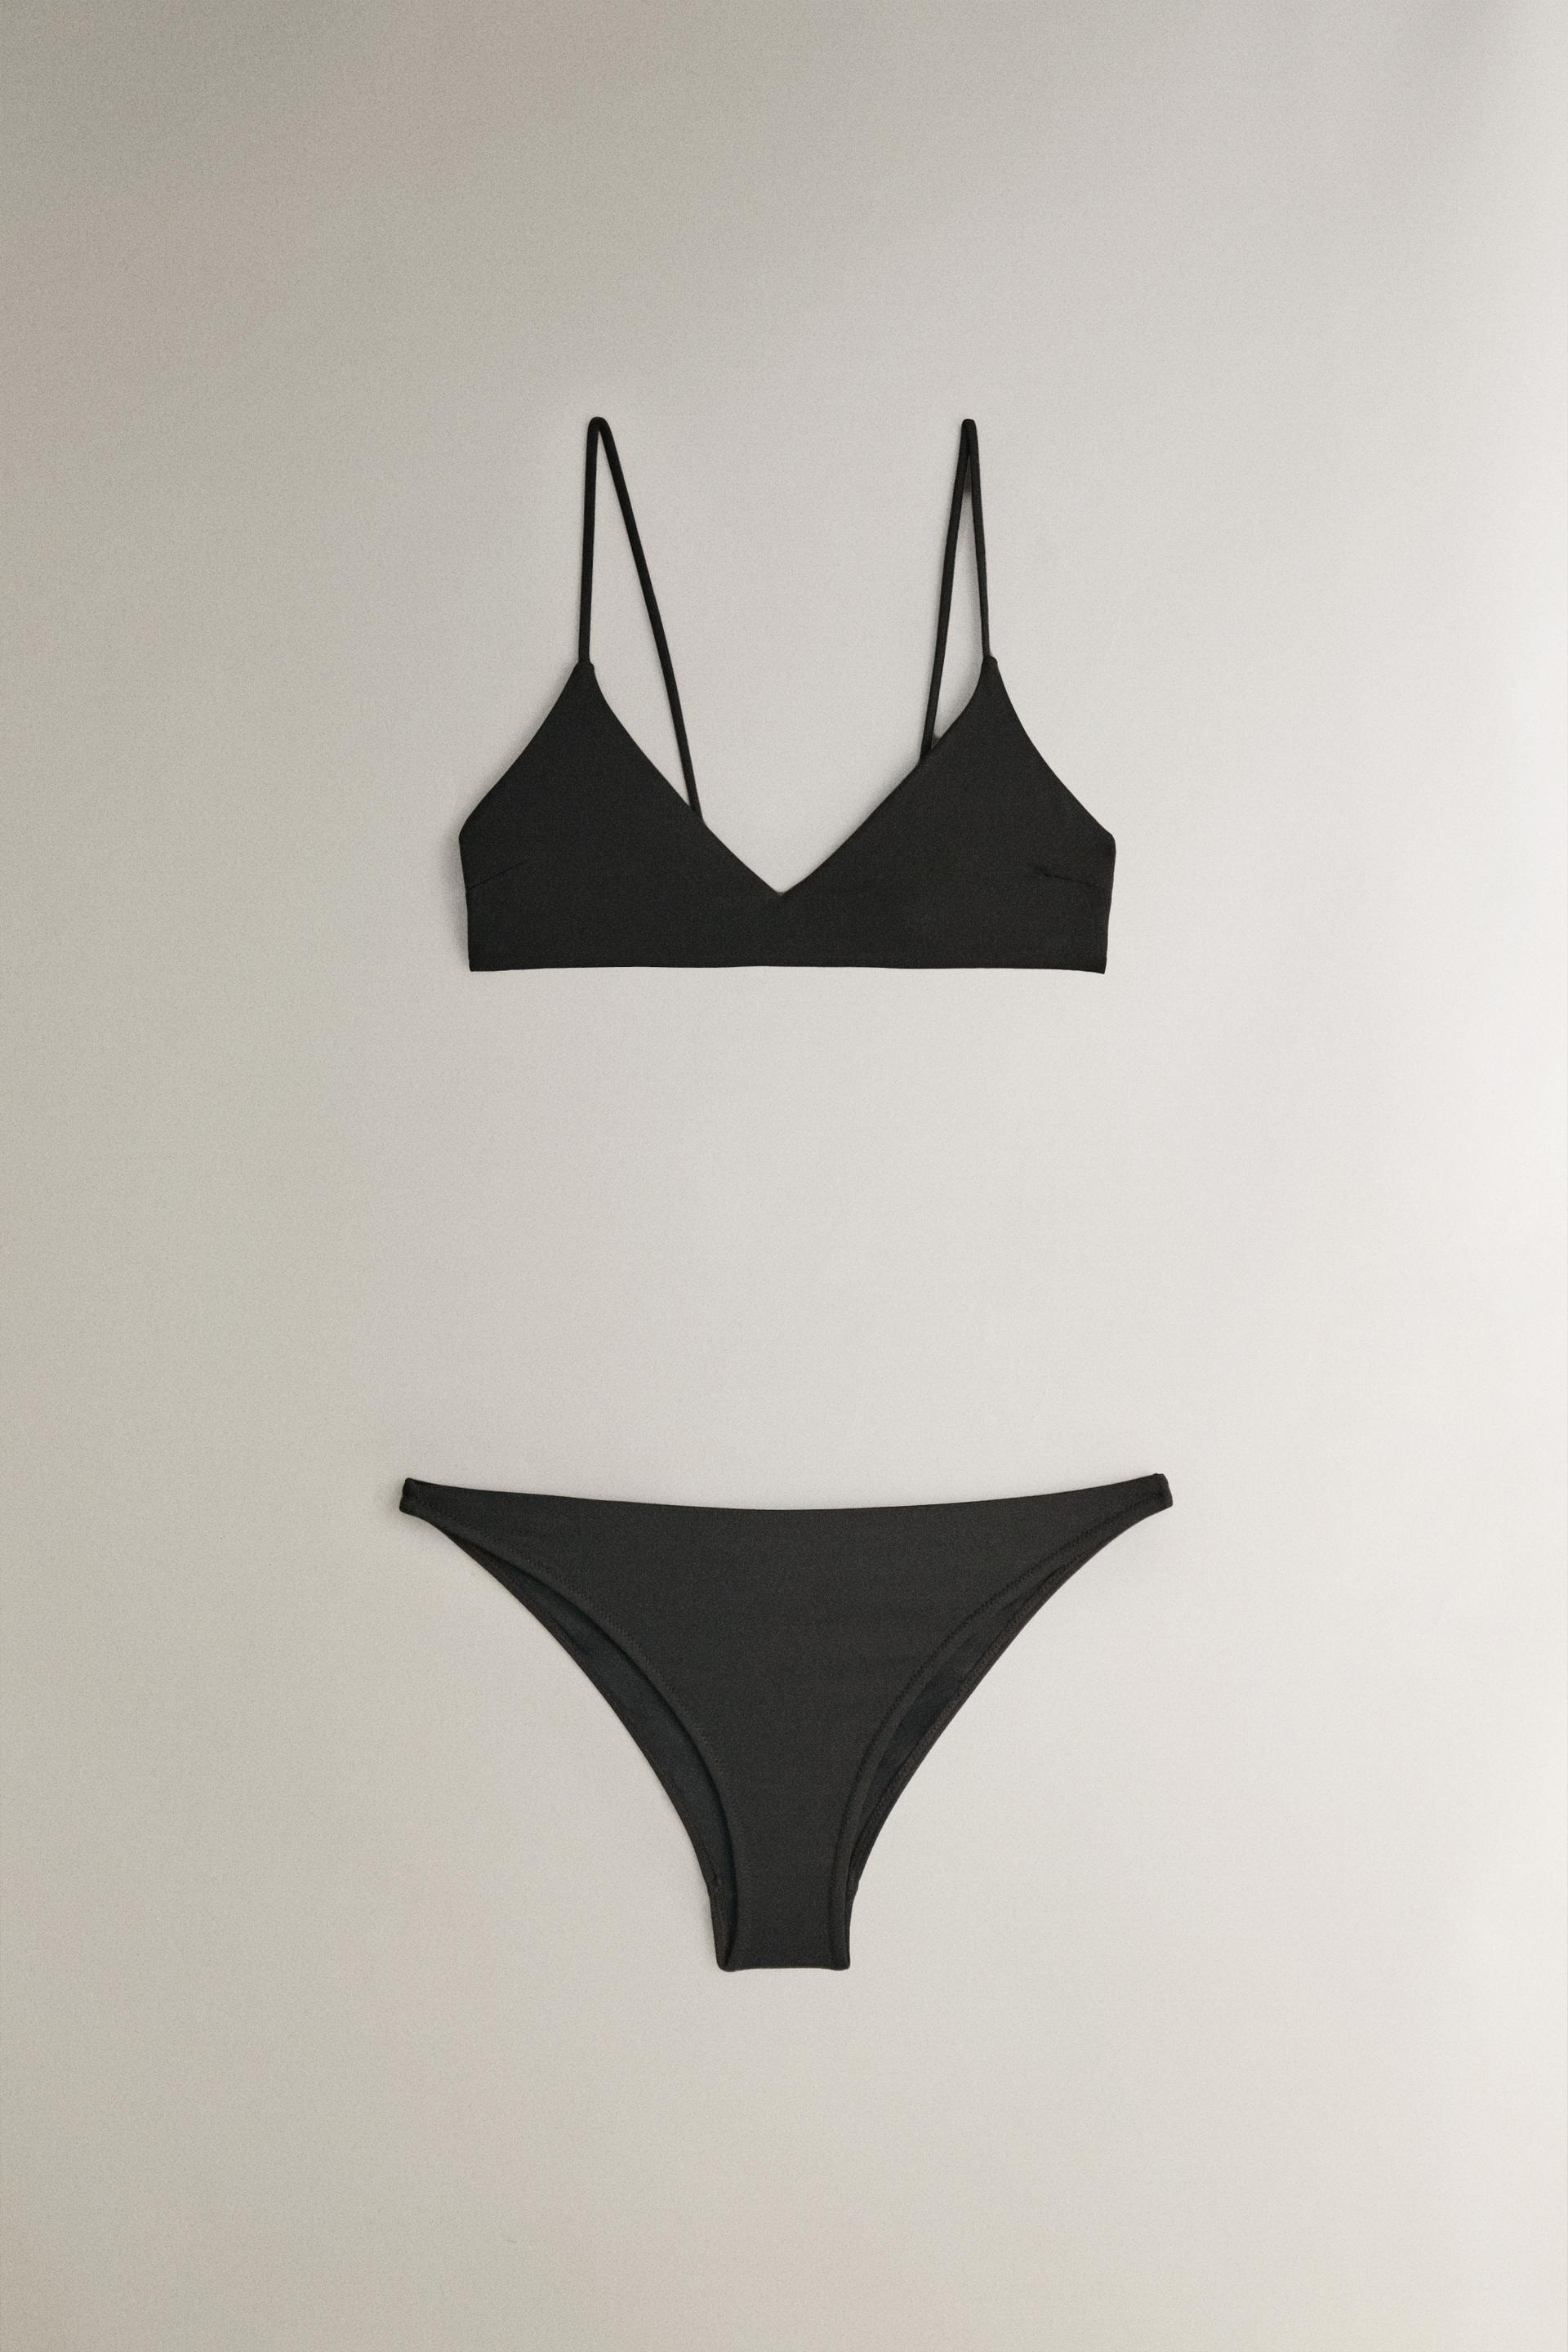 Boohoo strappy velvety Bralette in grey bikini top beach , Women's Fashion,  New Undergarments & Loungewear on Carousell